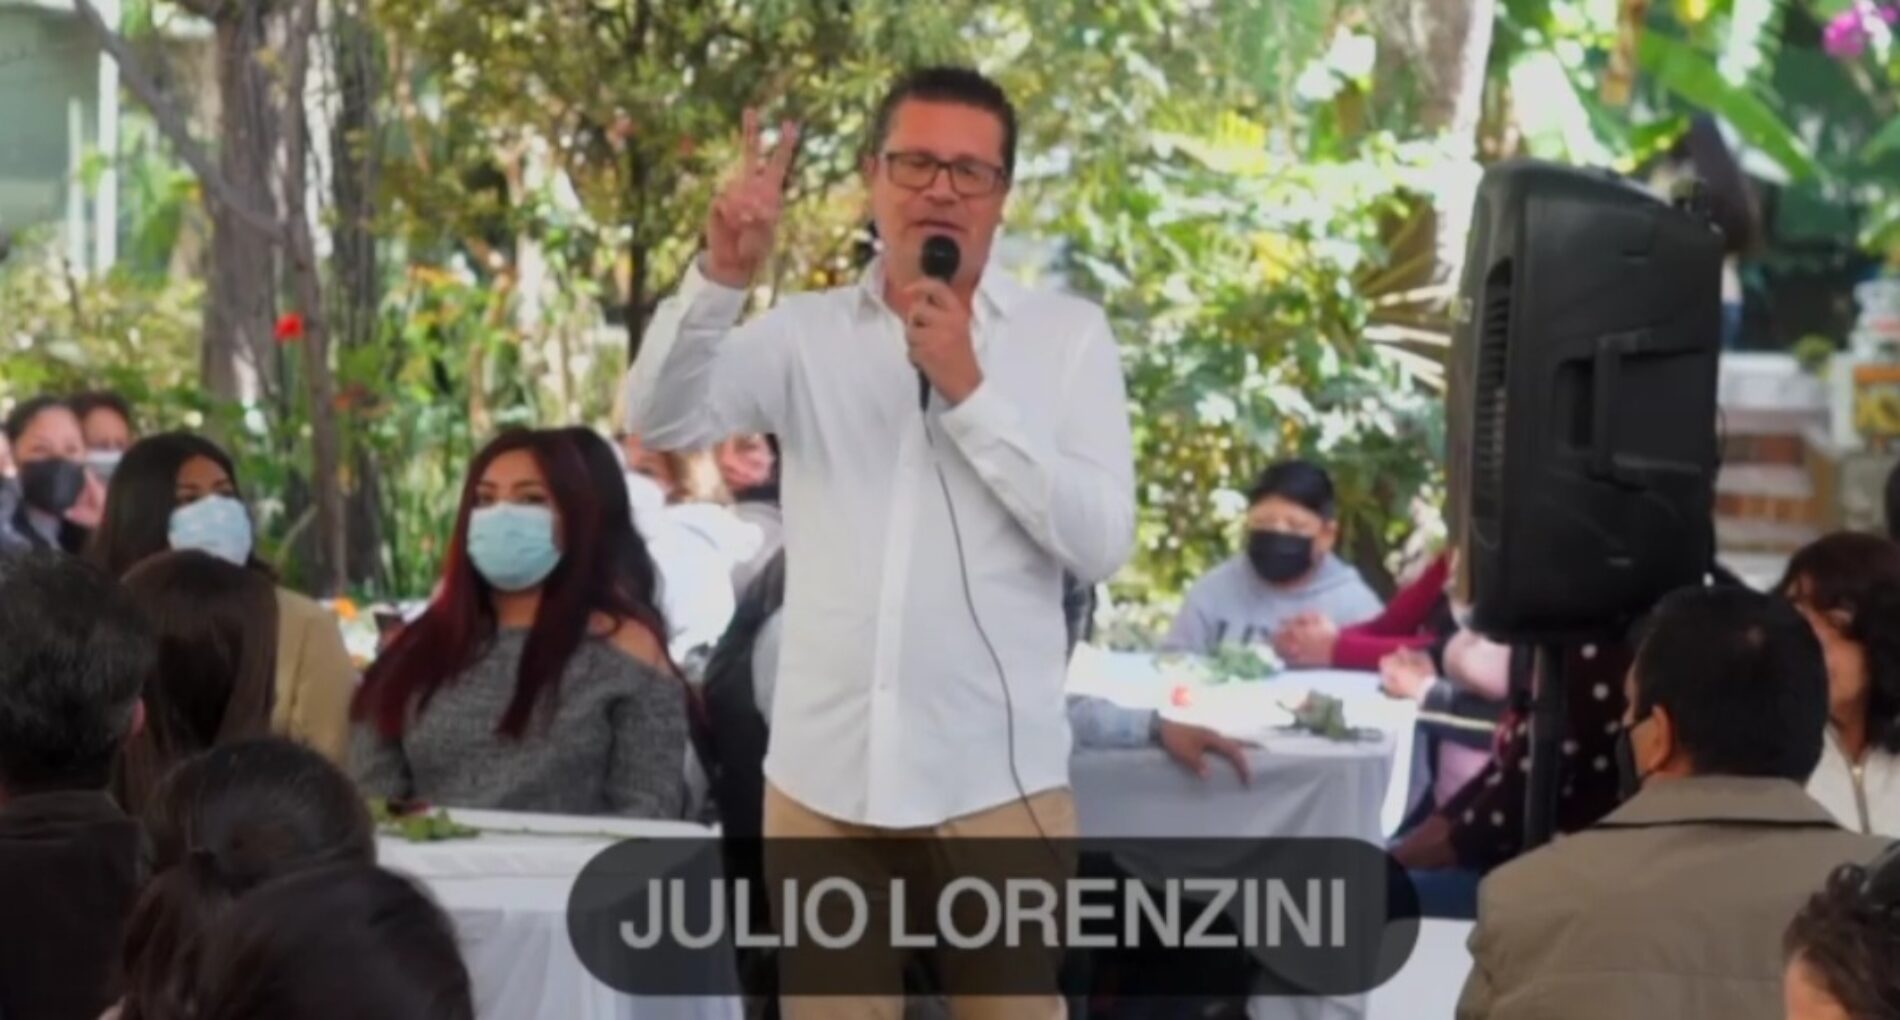 FILTRAN VIDEO DE JULIO LORENZINI